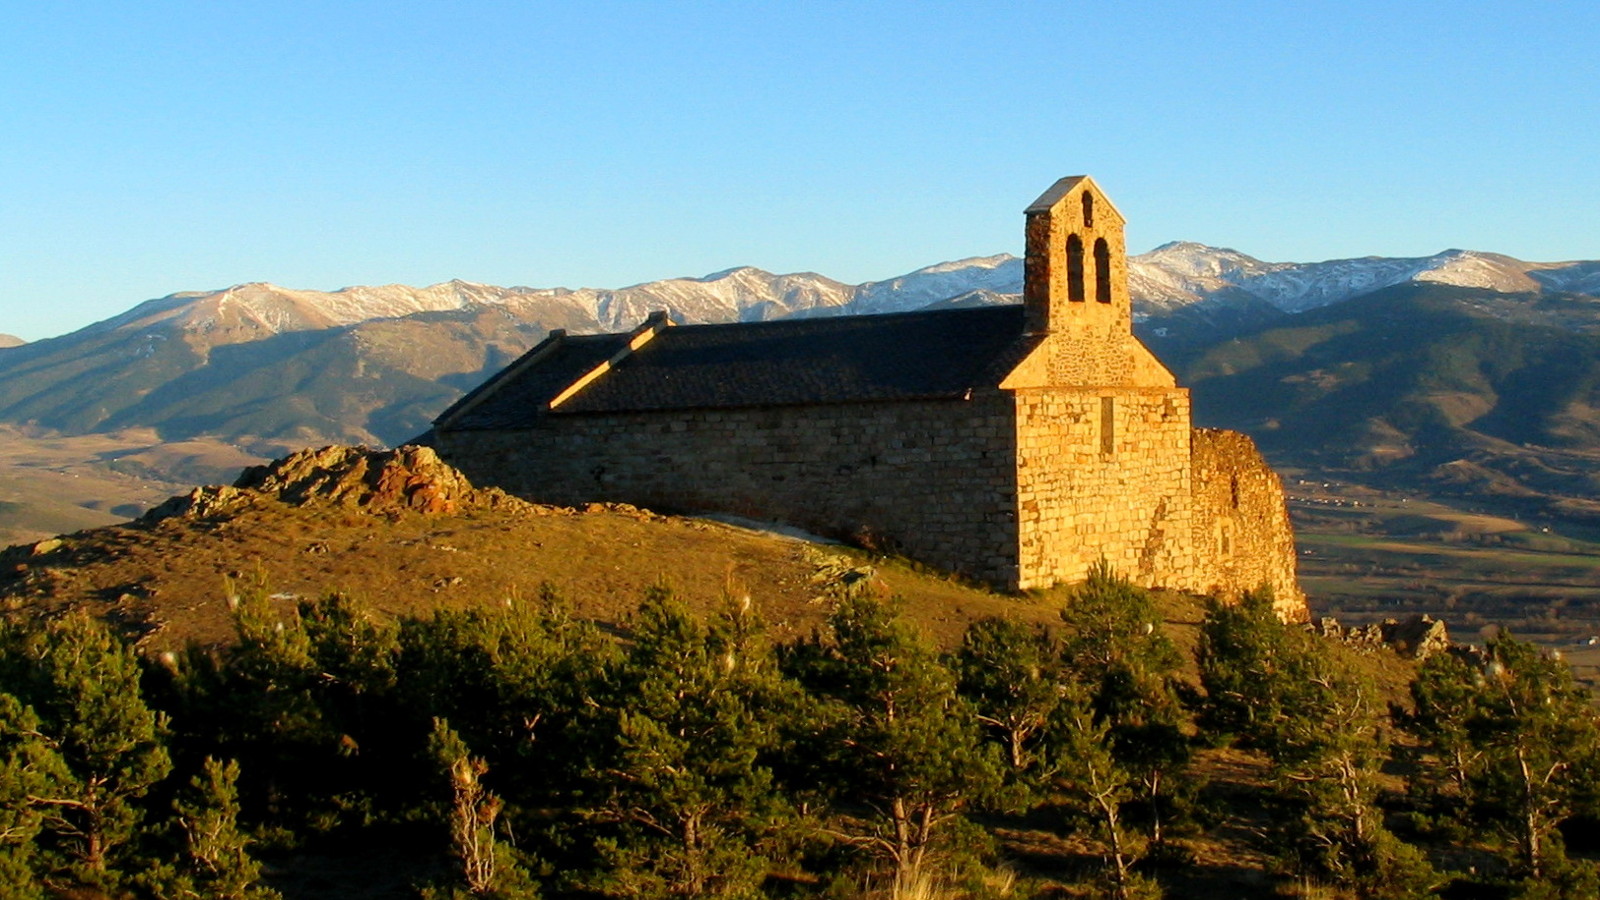 The chapel of Belloc (1,668 m)